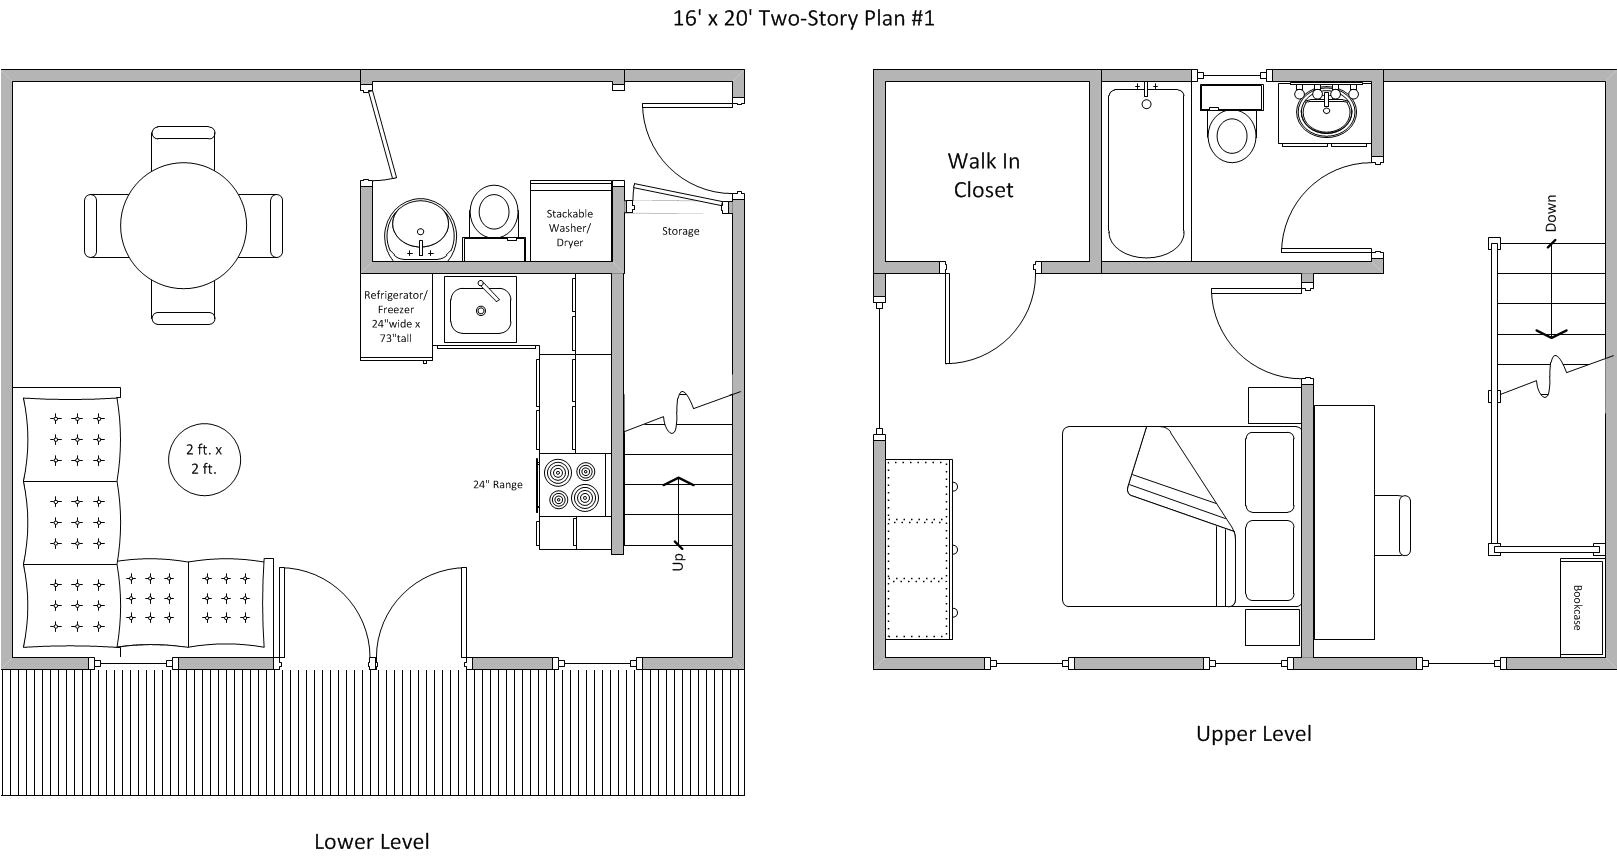 Micro House Plans. Стильный дизайн план схема базы отдыха. Plans 2nd Floor 20x10 Meters. Plan 1 story.